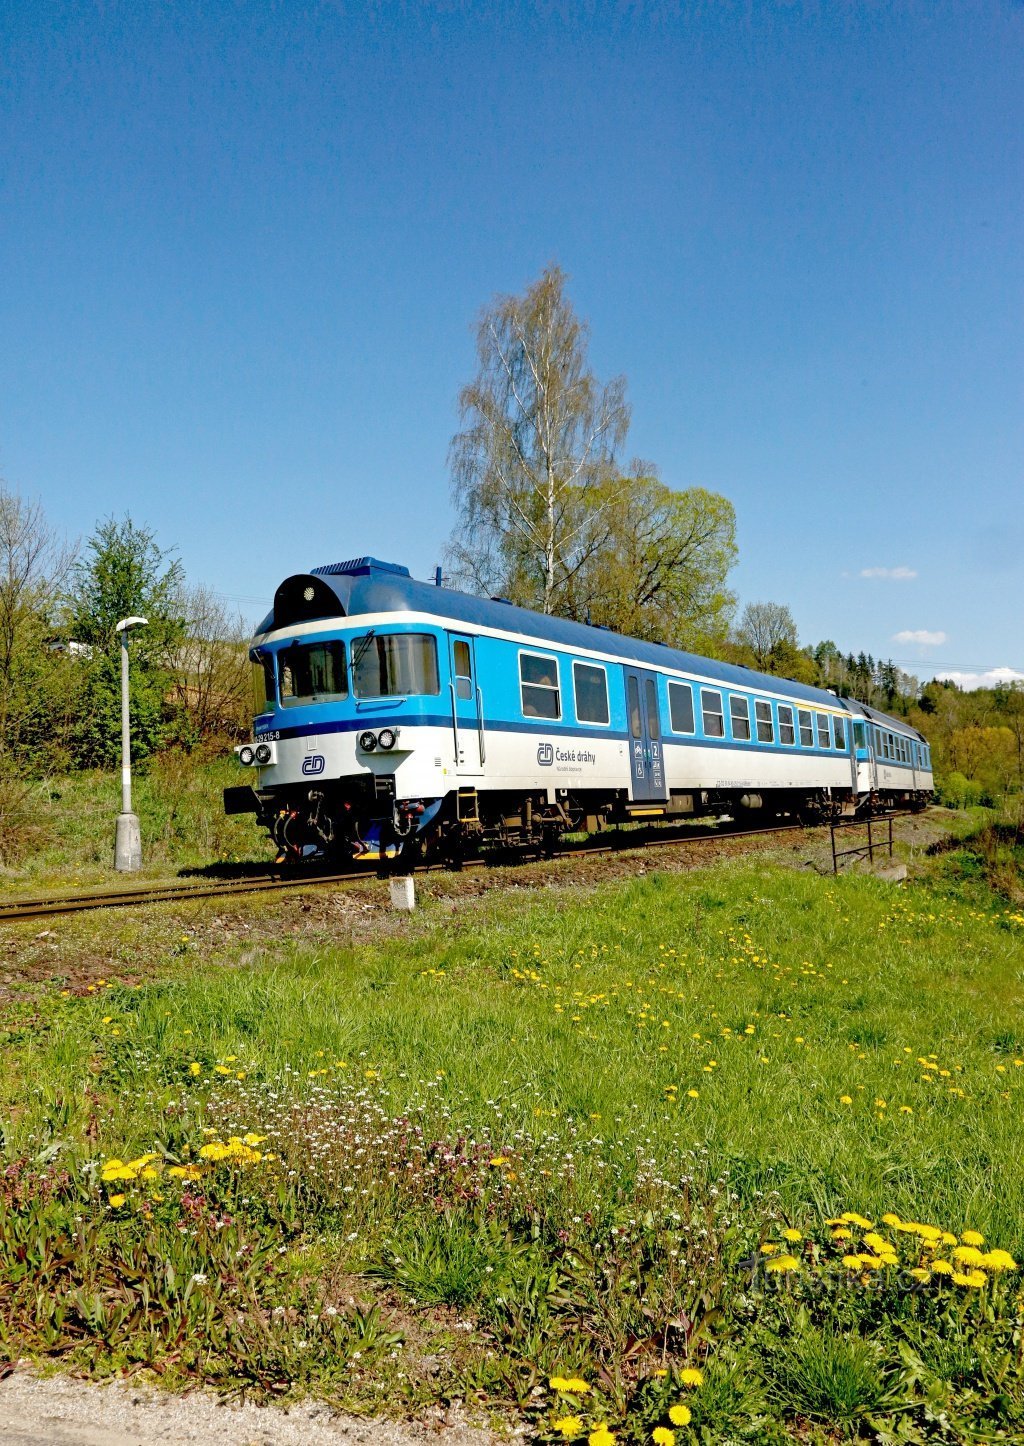 Viajando de trem, fonte: ČD Photo Archive